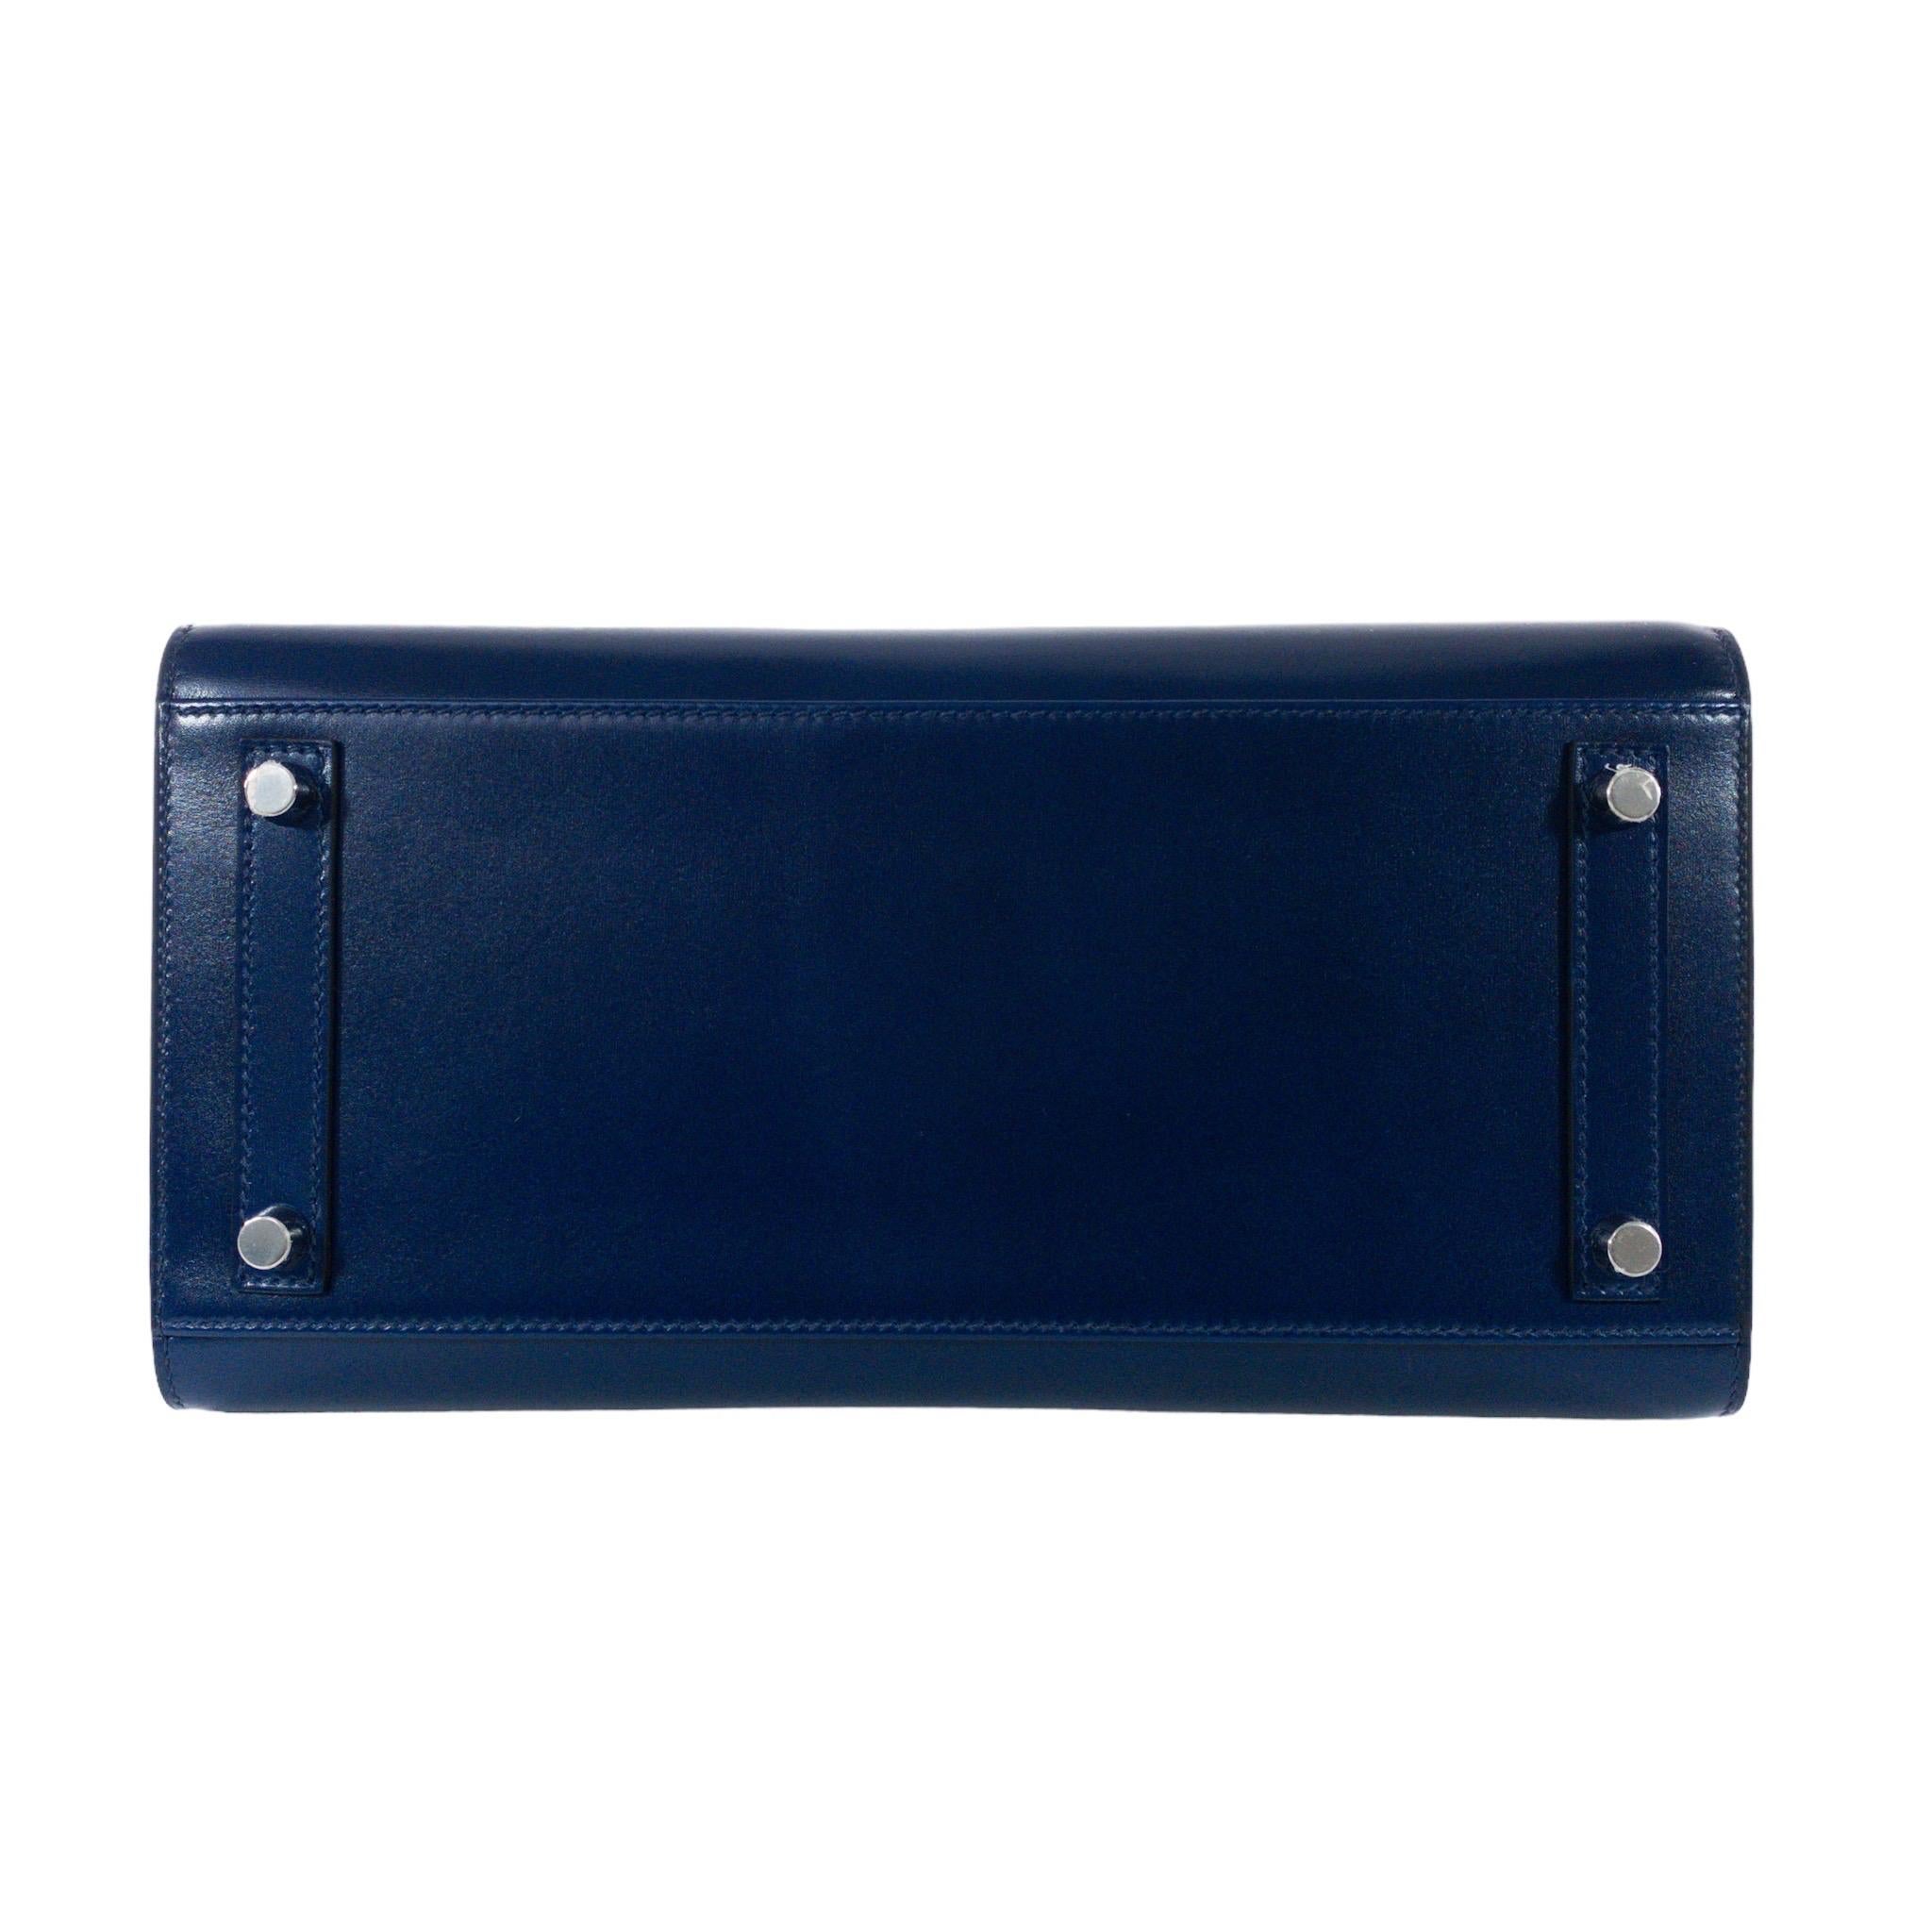 Brand New Hermes Birkin 30cm Sellier Blue Sapphire Box Palladium Hardware For Sale 5